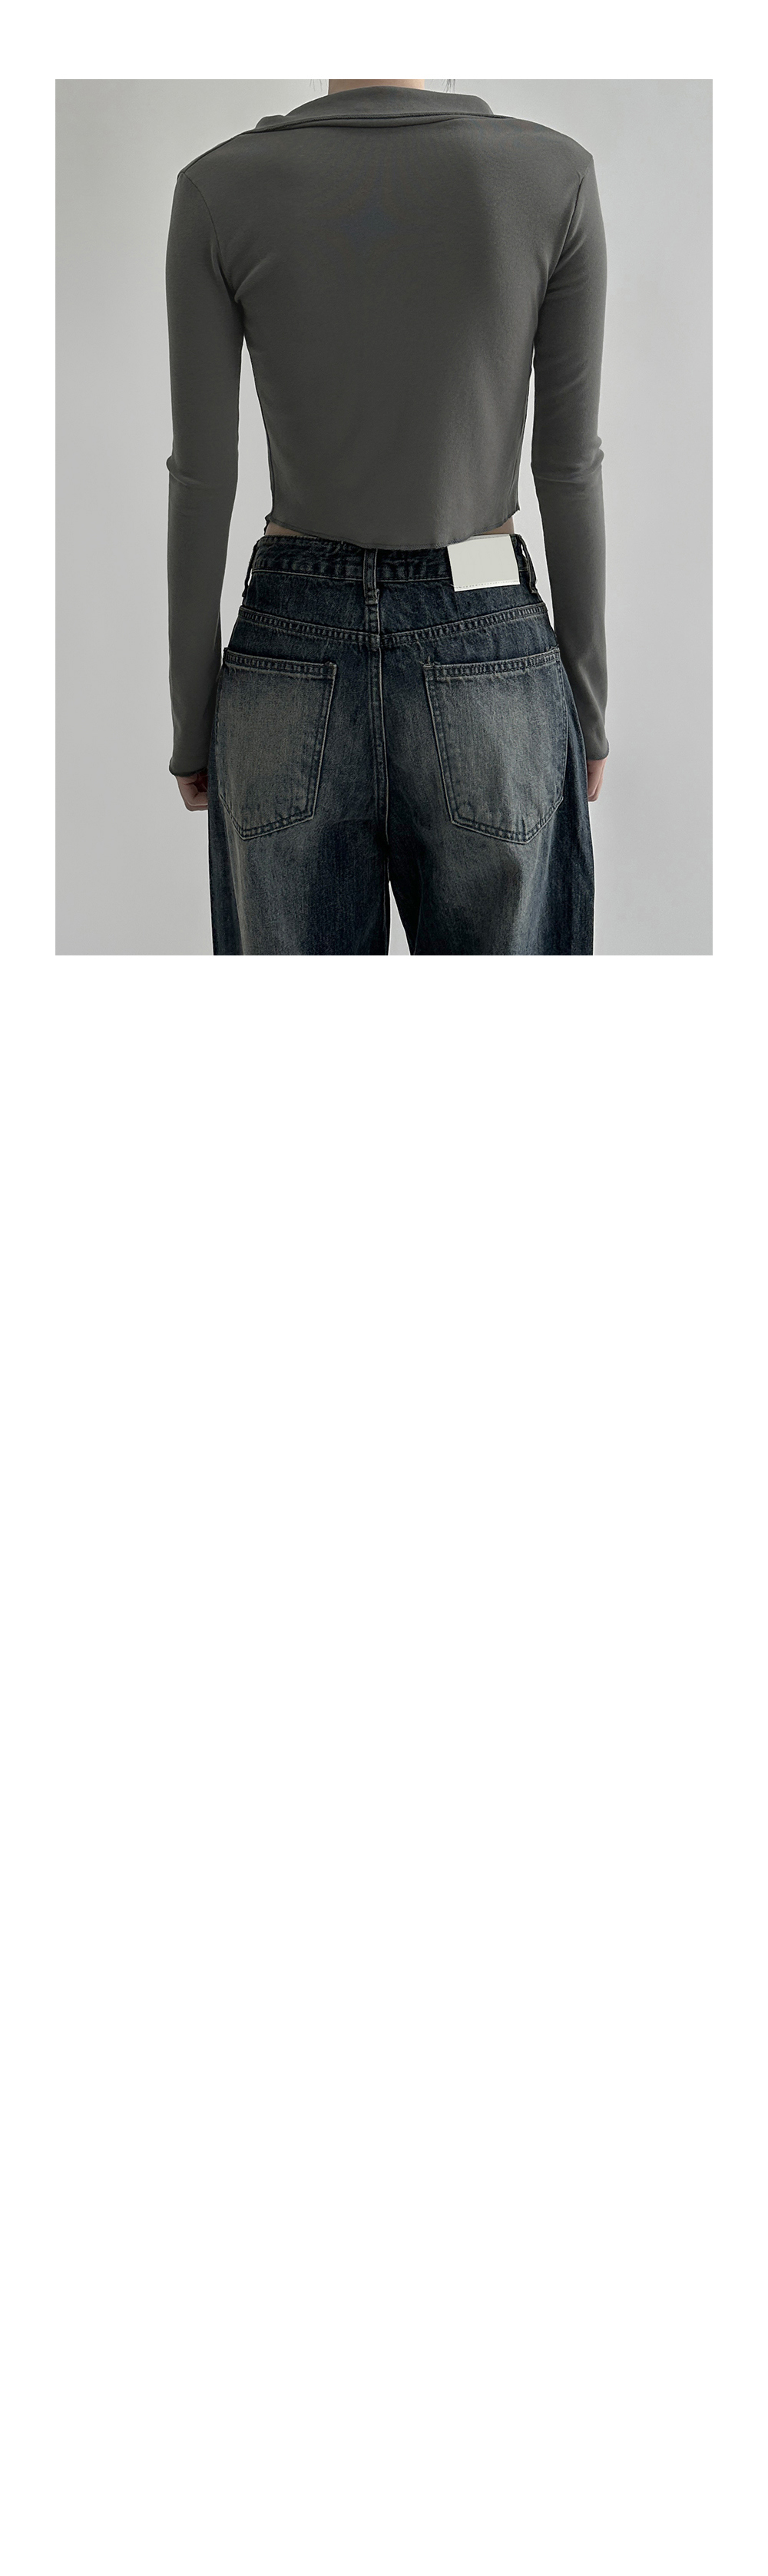 suspenders skirt/pants grey color image-S2L7